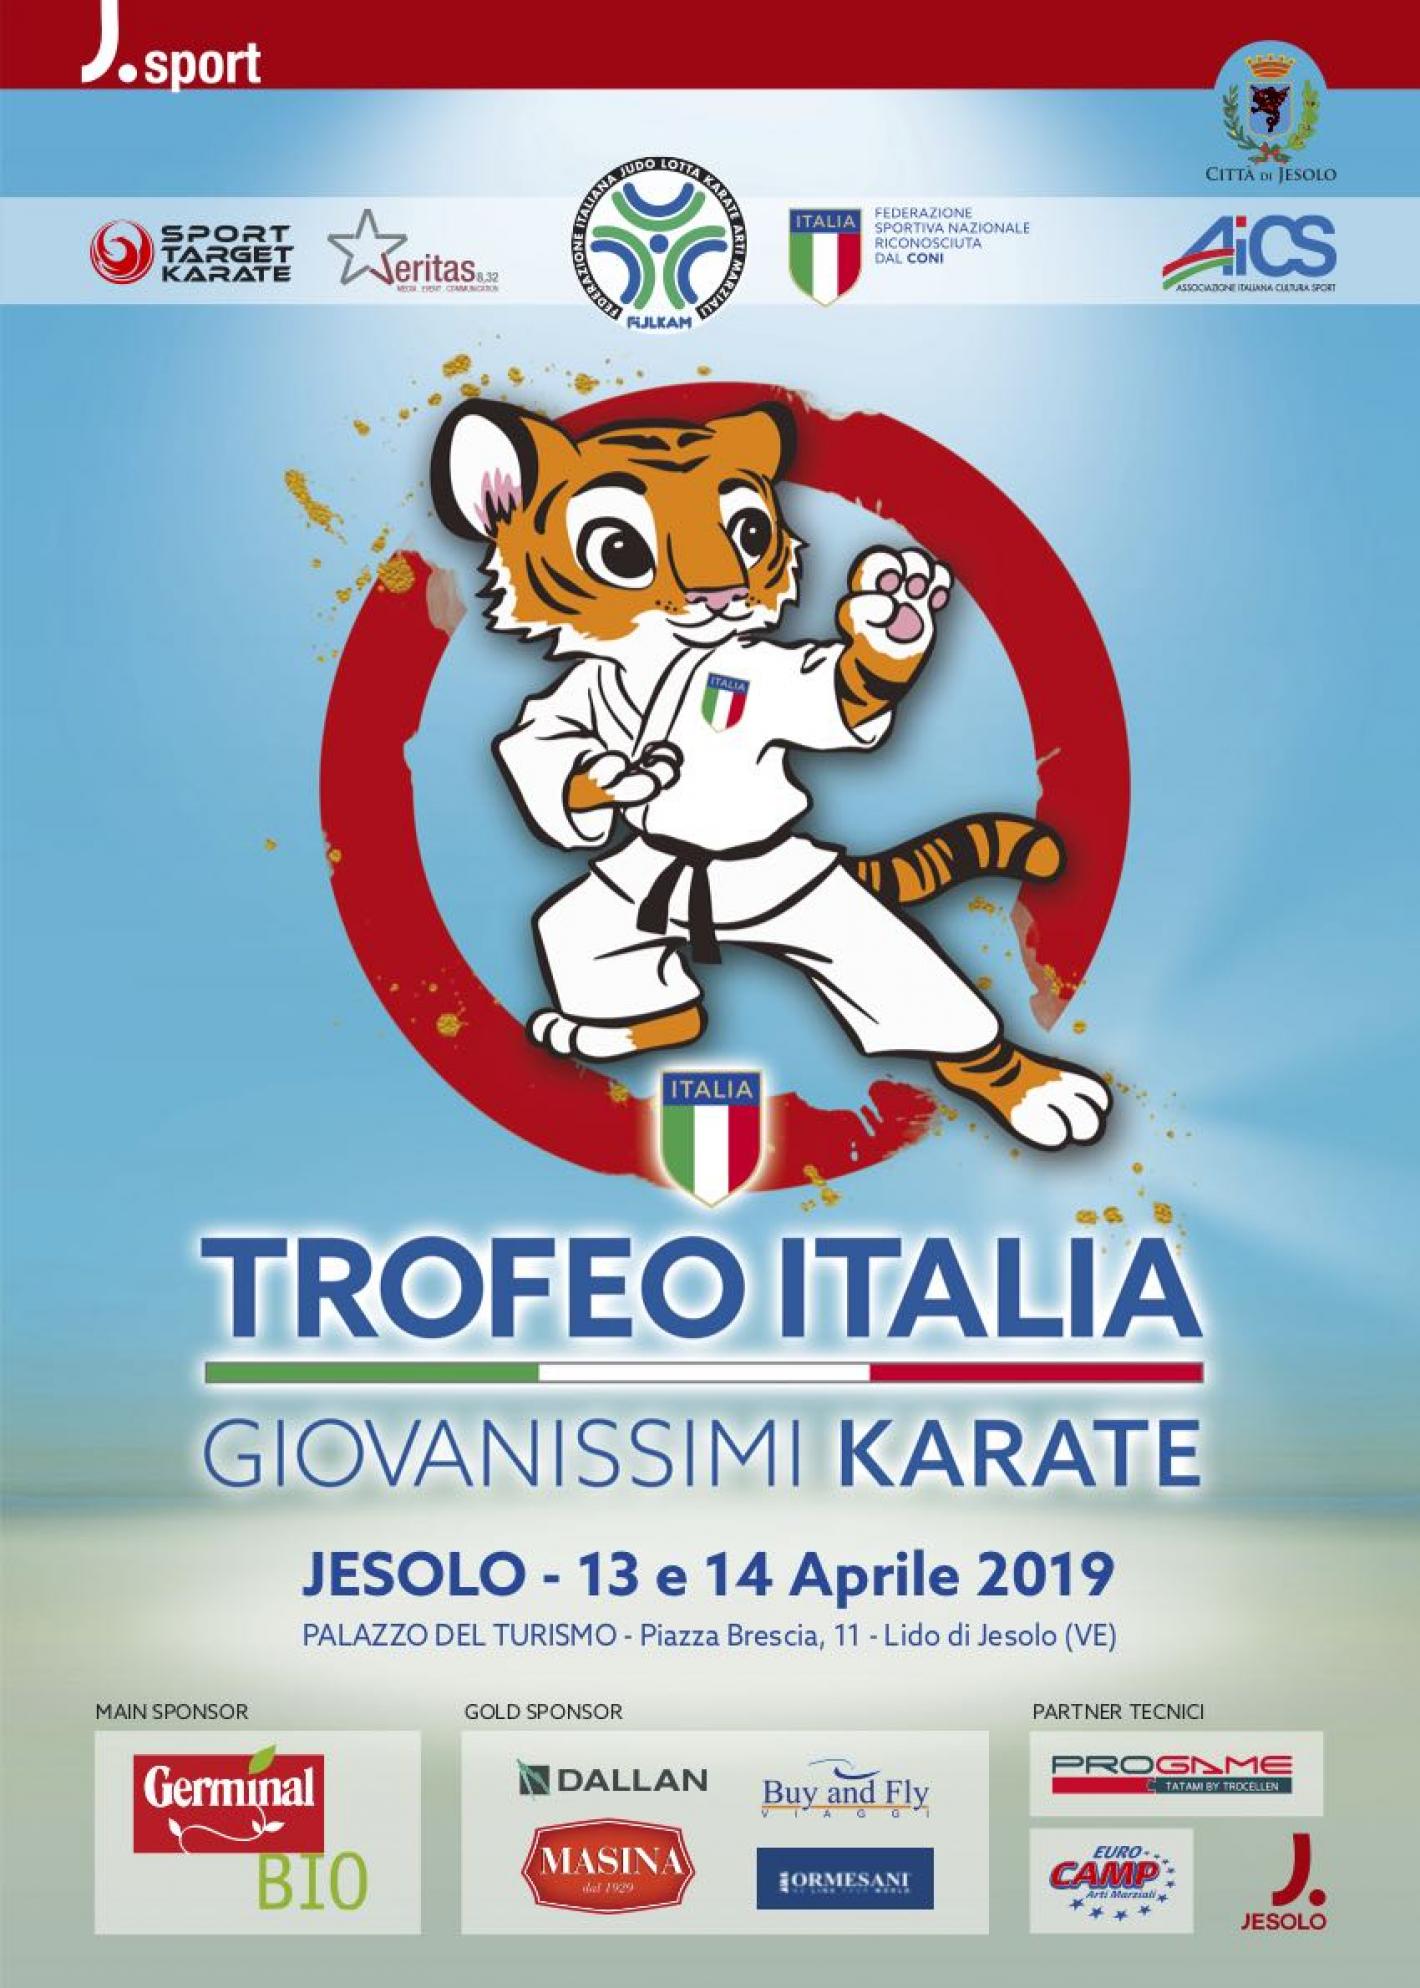 images/veneto/karate/2019/Bollettino_web/medium/locandinaweb.jpg